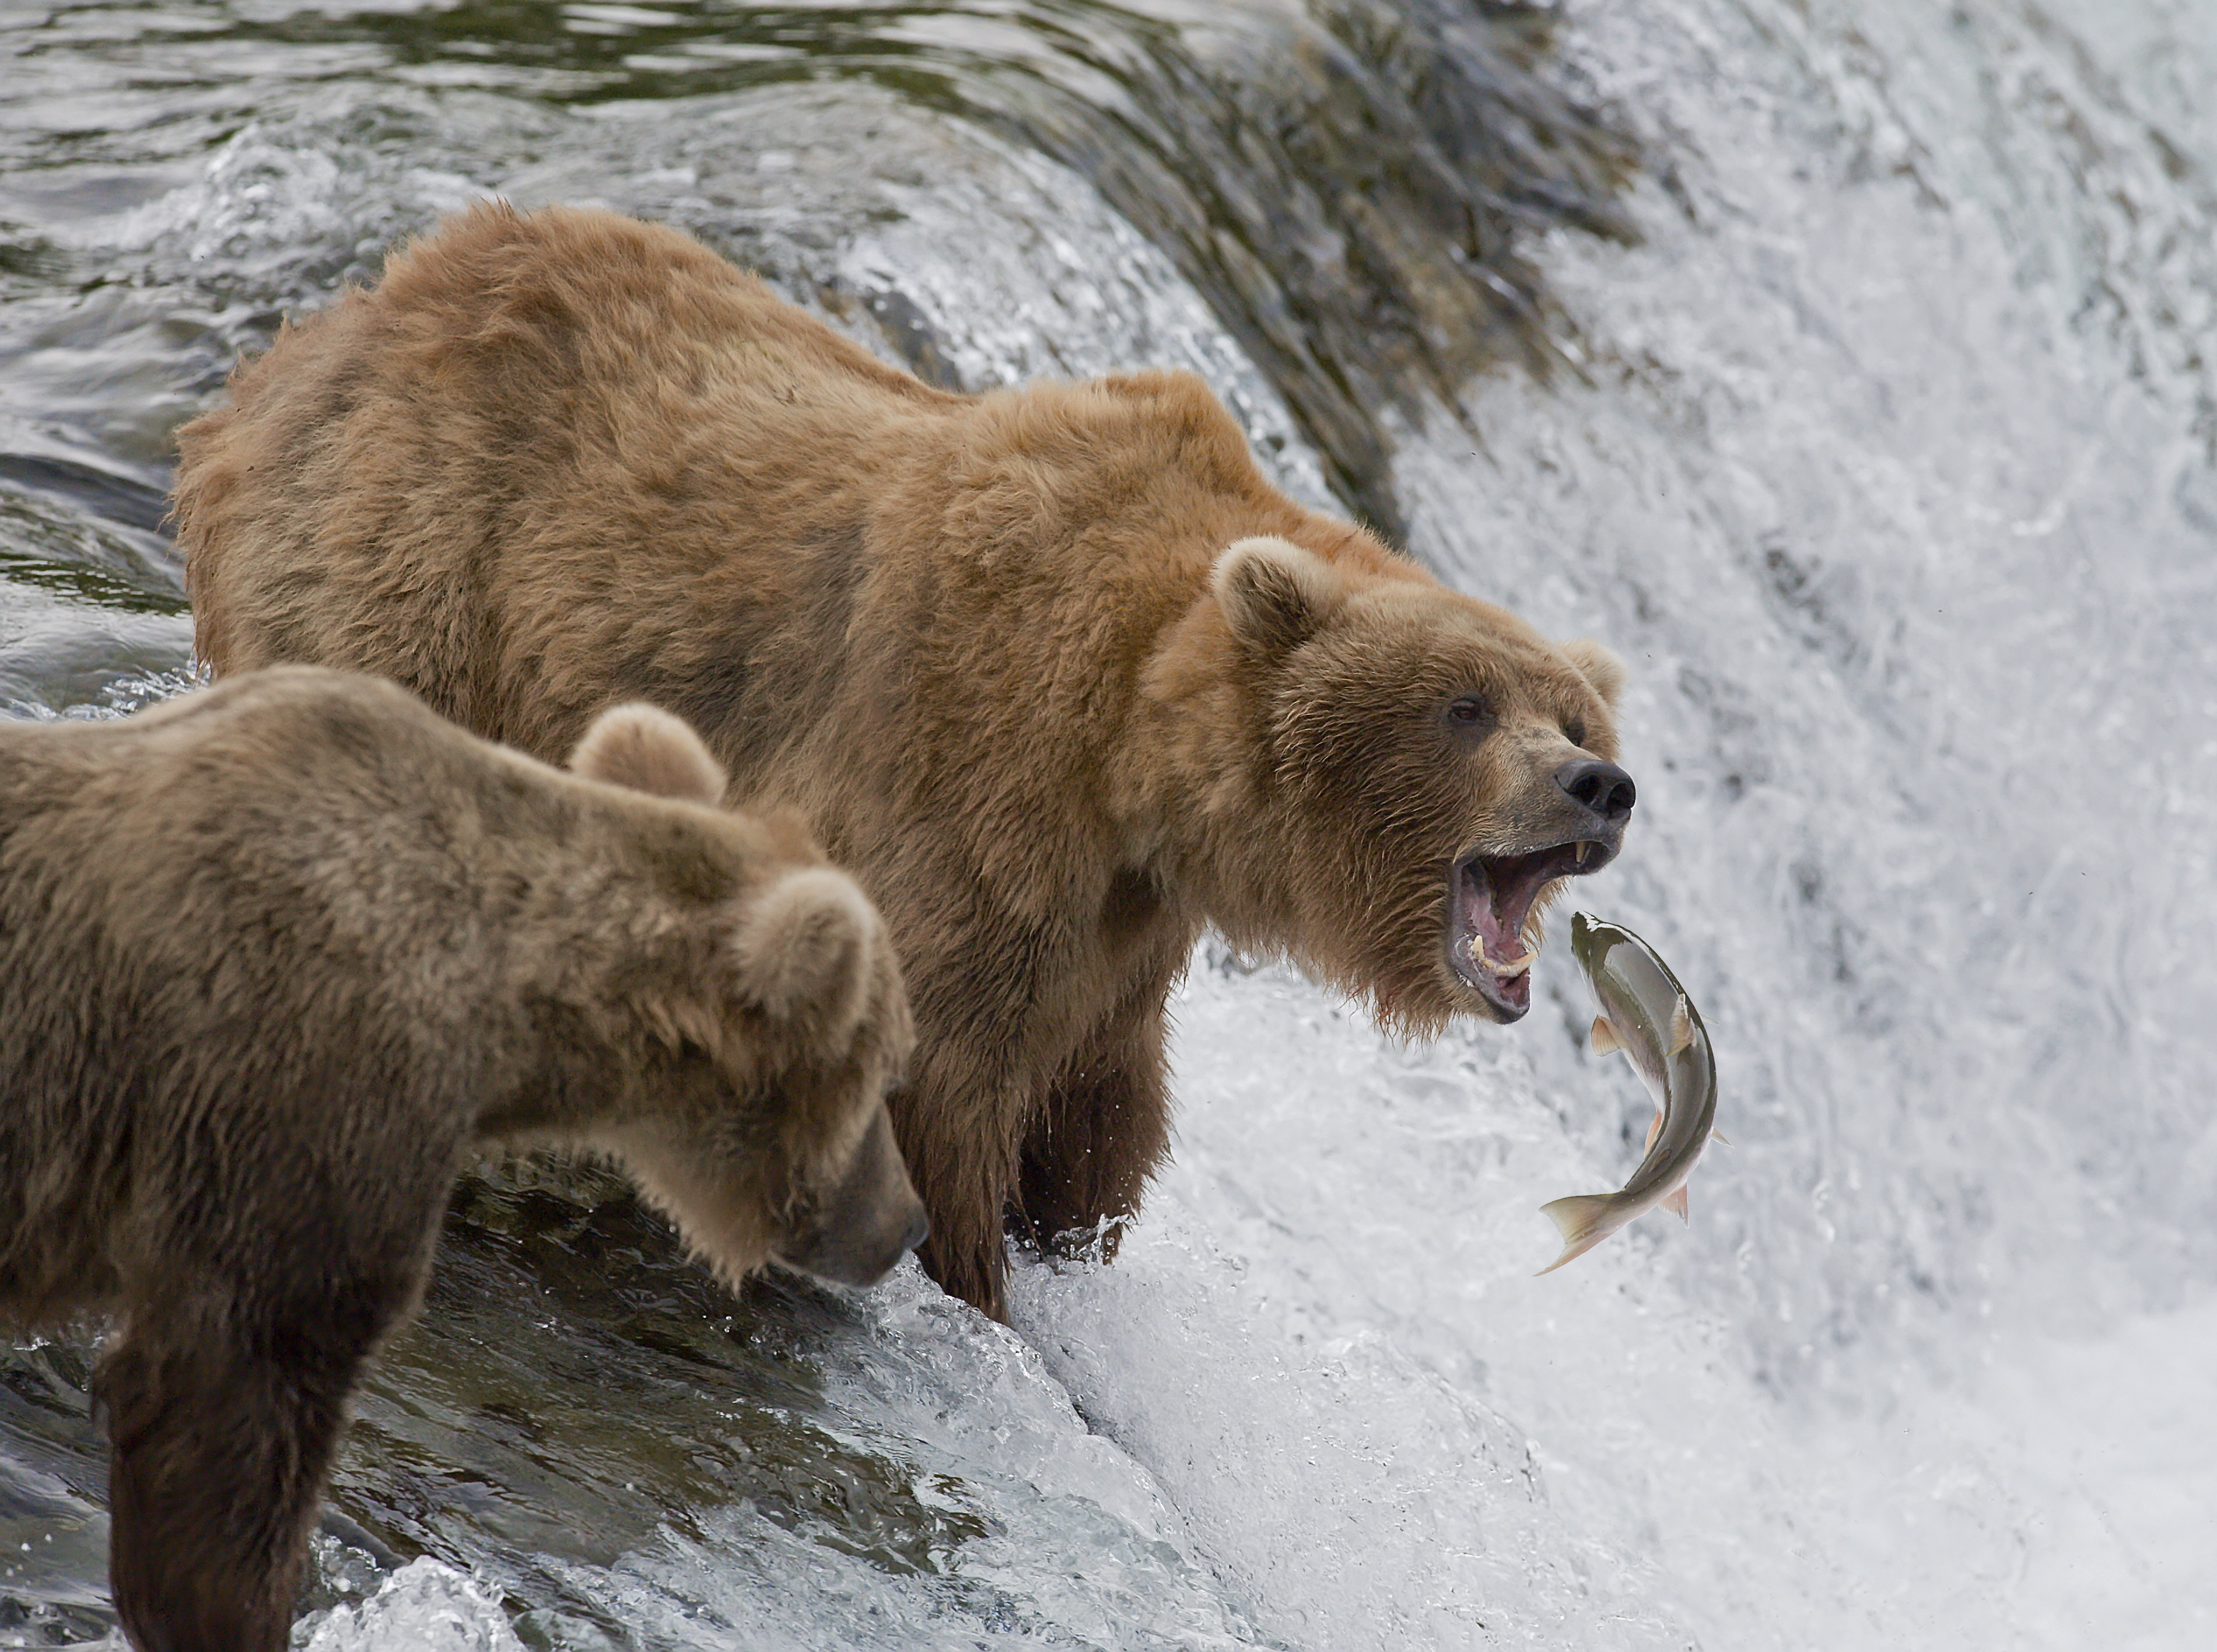 Two Kodiak bears catch fish as they jump upstream near a waterfall.